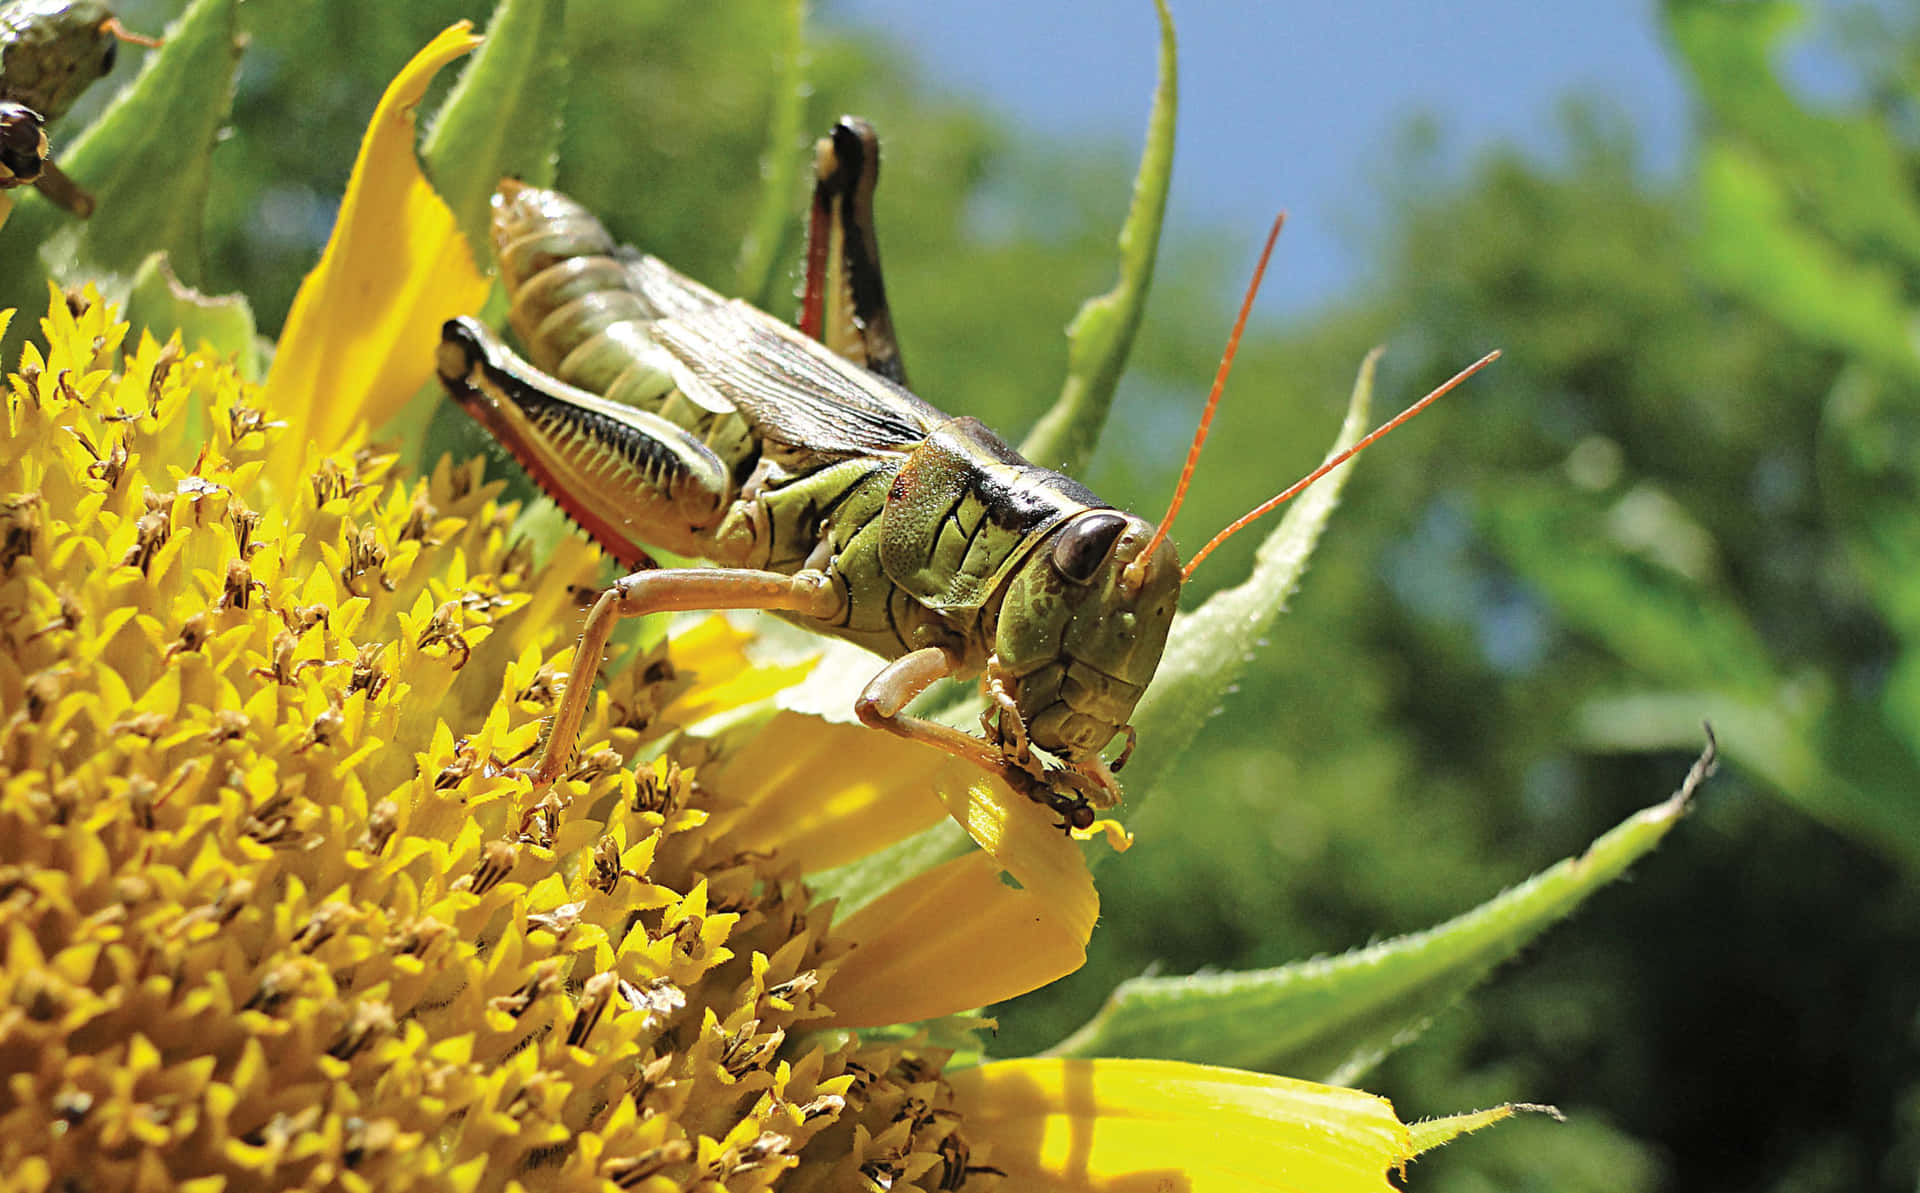 Close-up shot of a grasshopper perched on a leaf